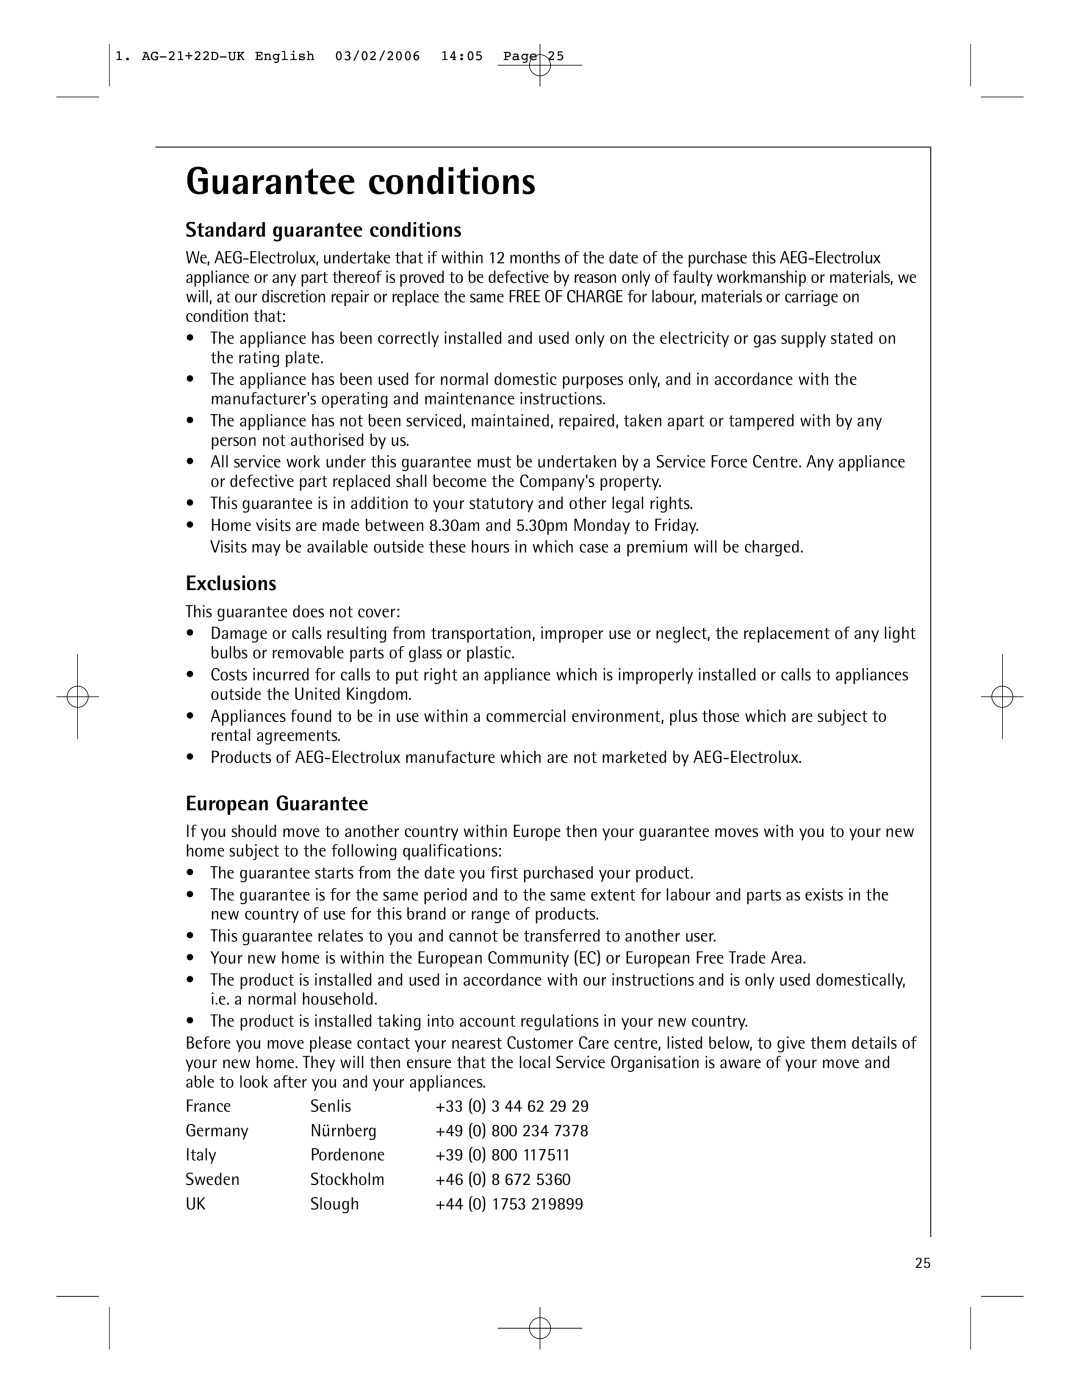 AEG MC1751E, MC1761E Guarantee conditions, Standard guarantee conditions, Exclusions, European Guarantee 